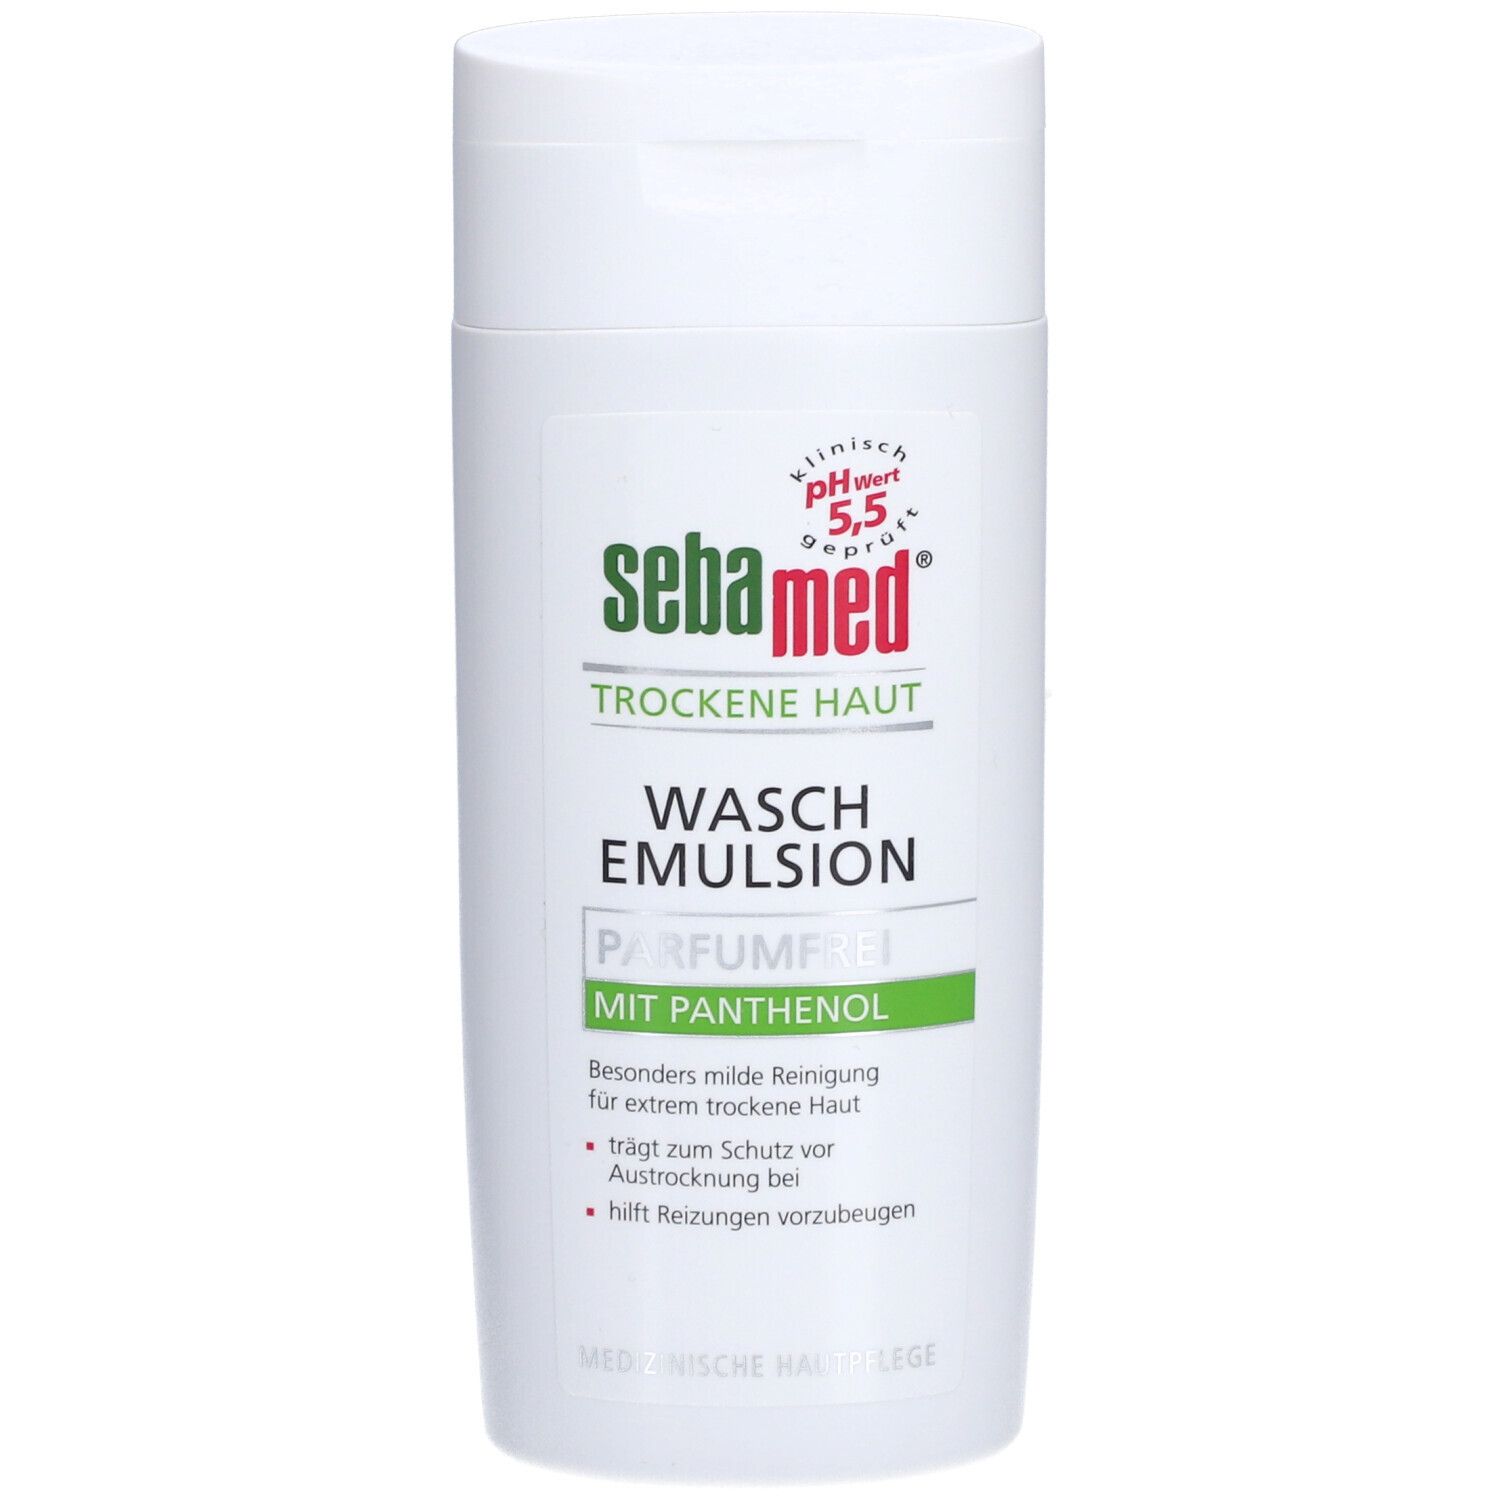 sebamed® Trockene Haut Waschemulsion Parfumfrei